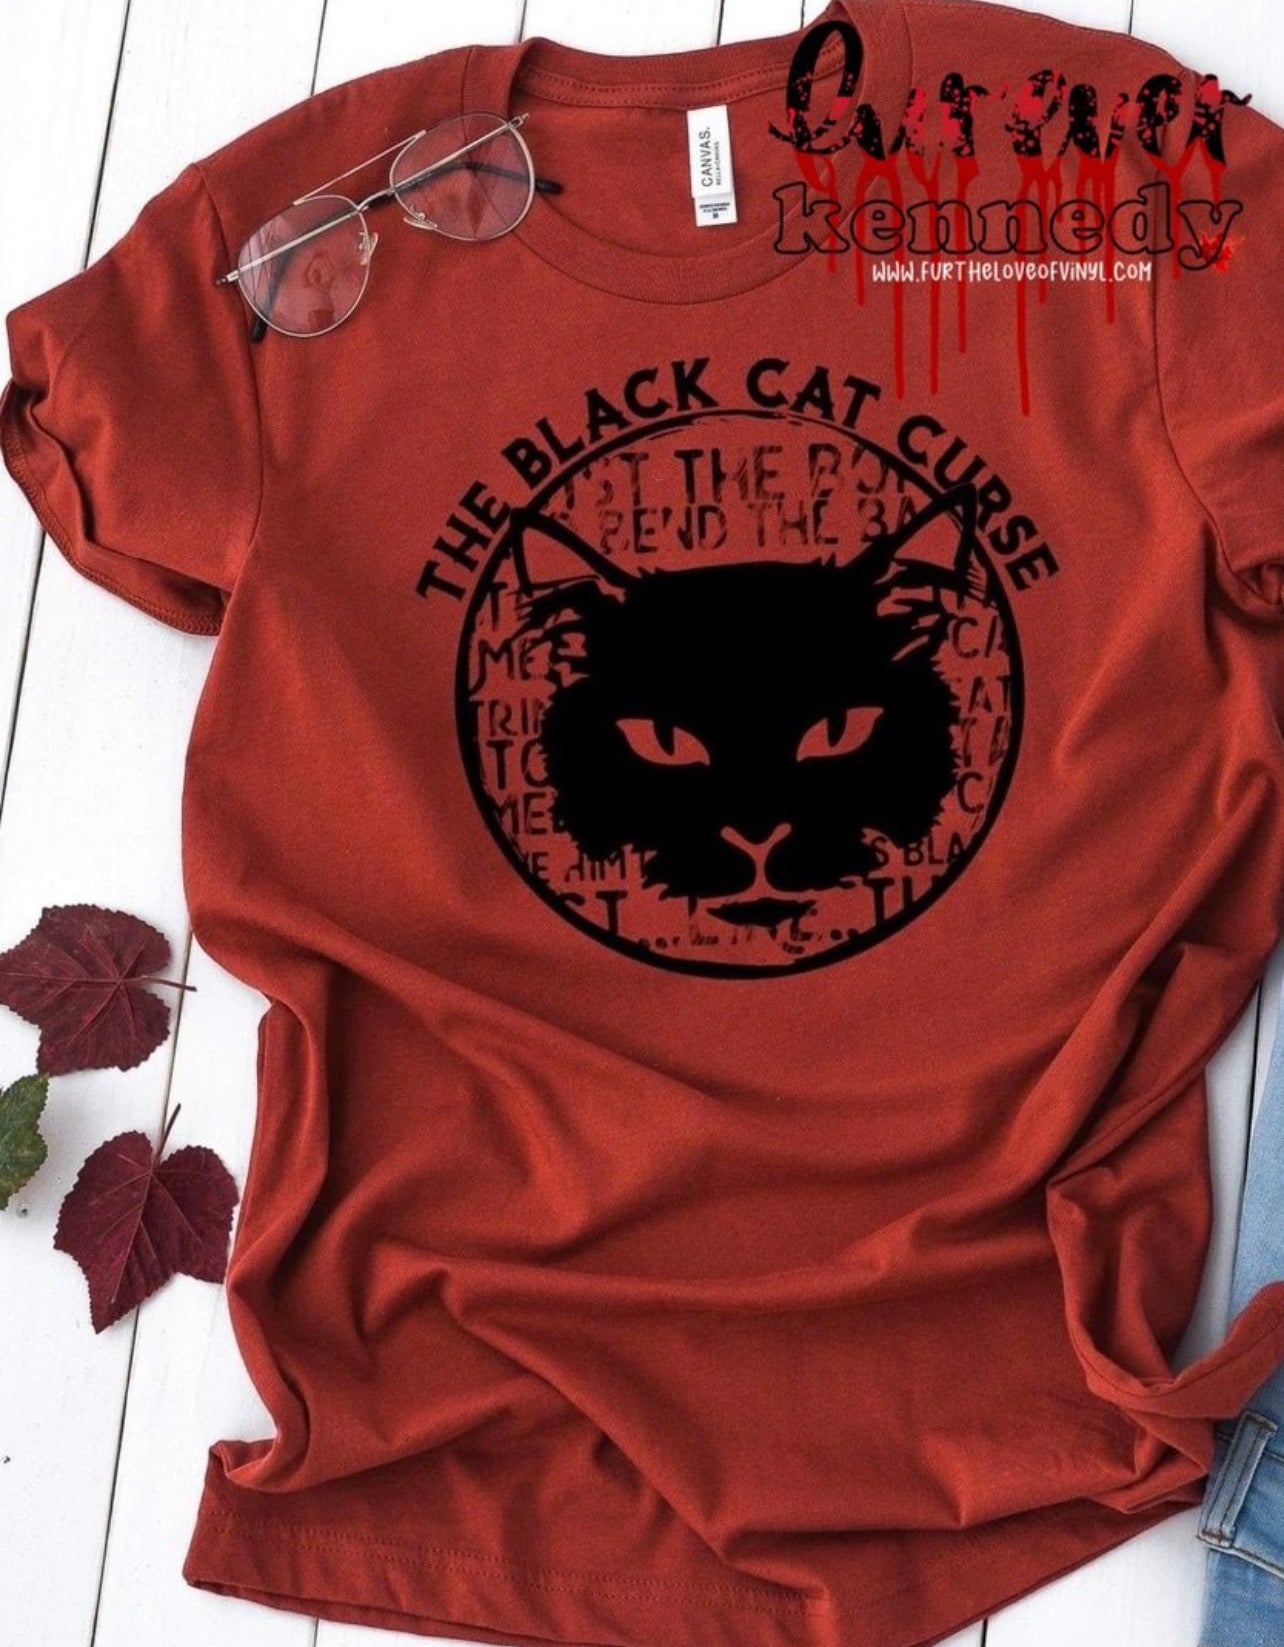 (MTO) Apparel: Black cat curse